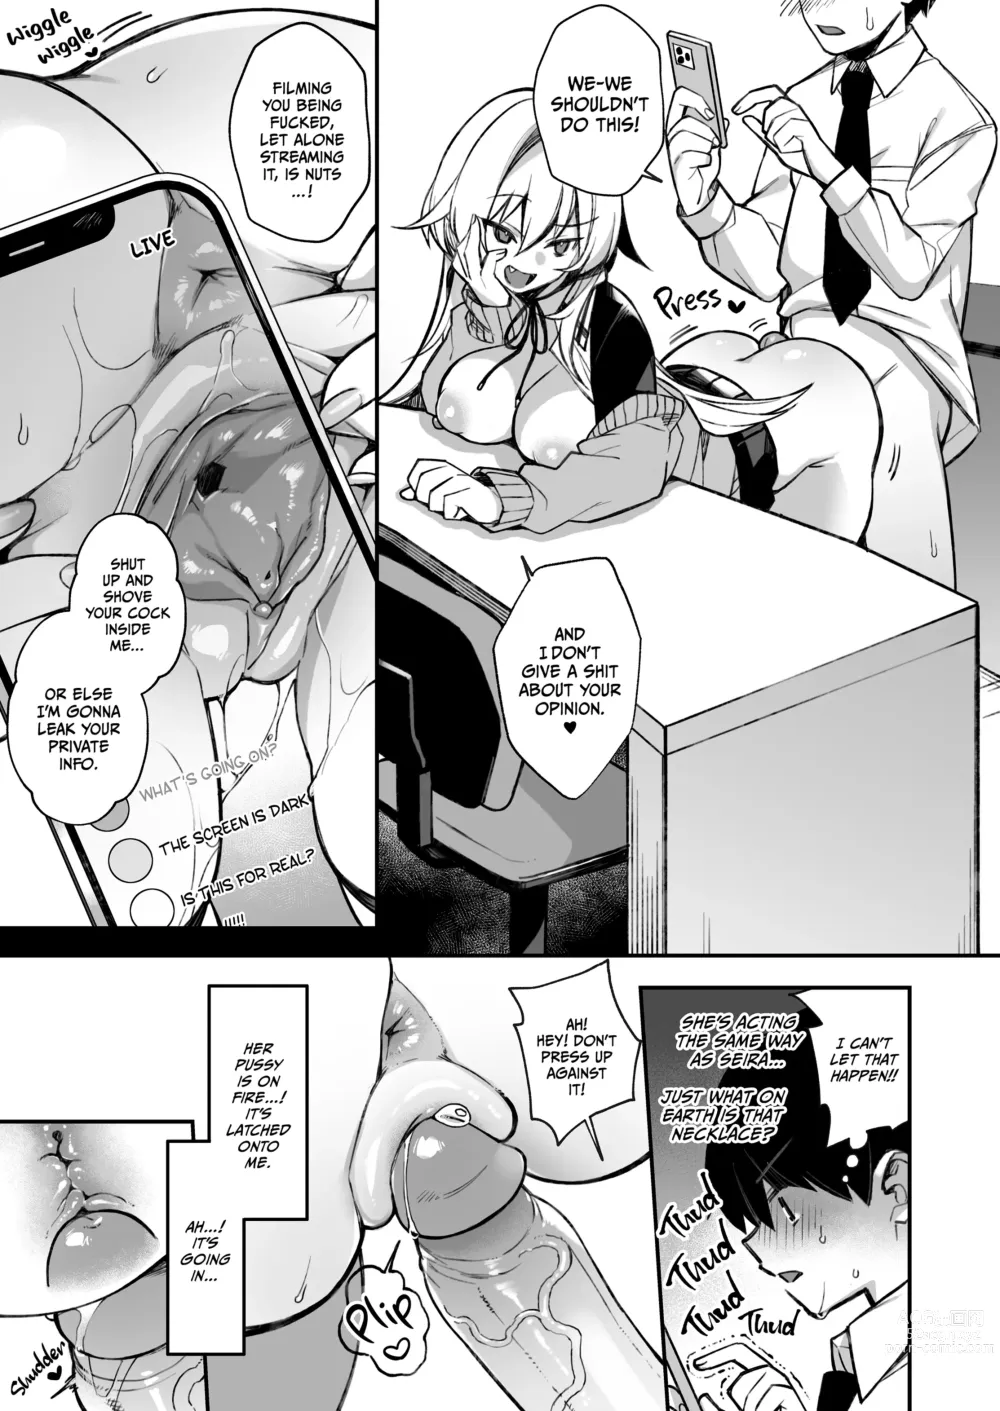 Page 36 of manga Hypnosis 1 (uncensored)